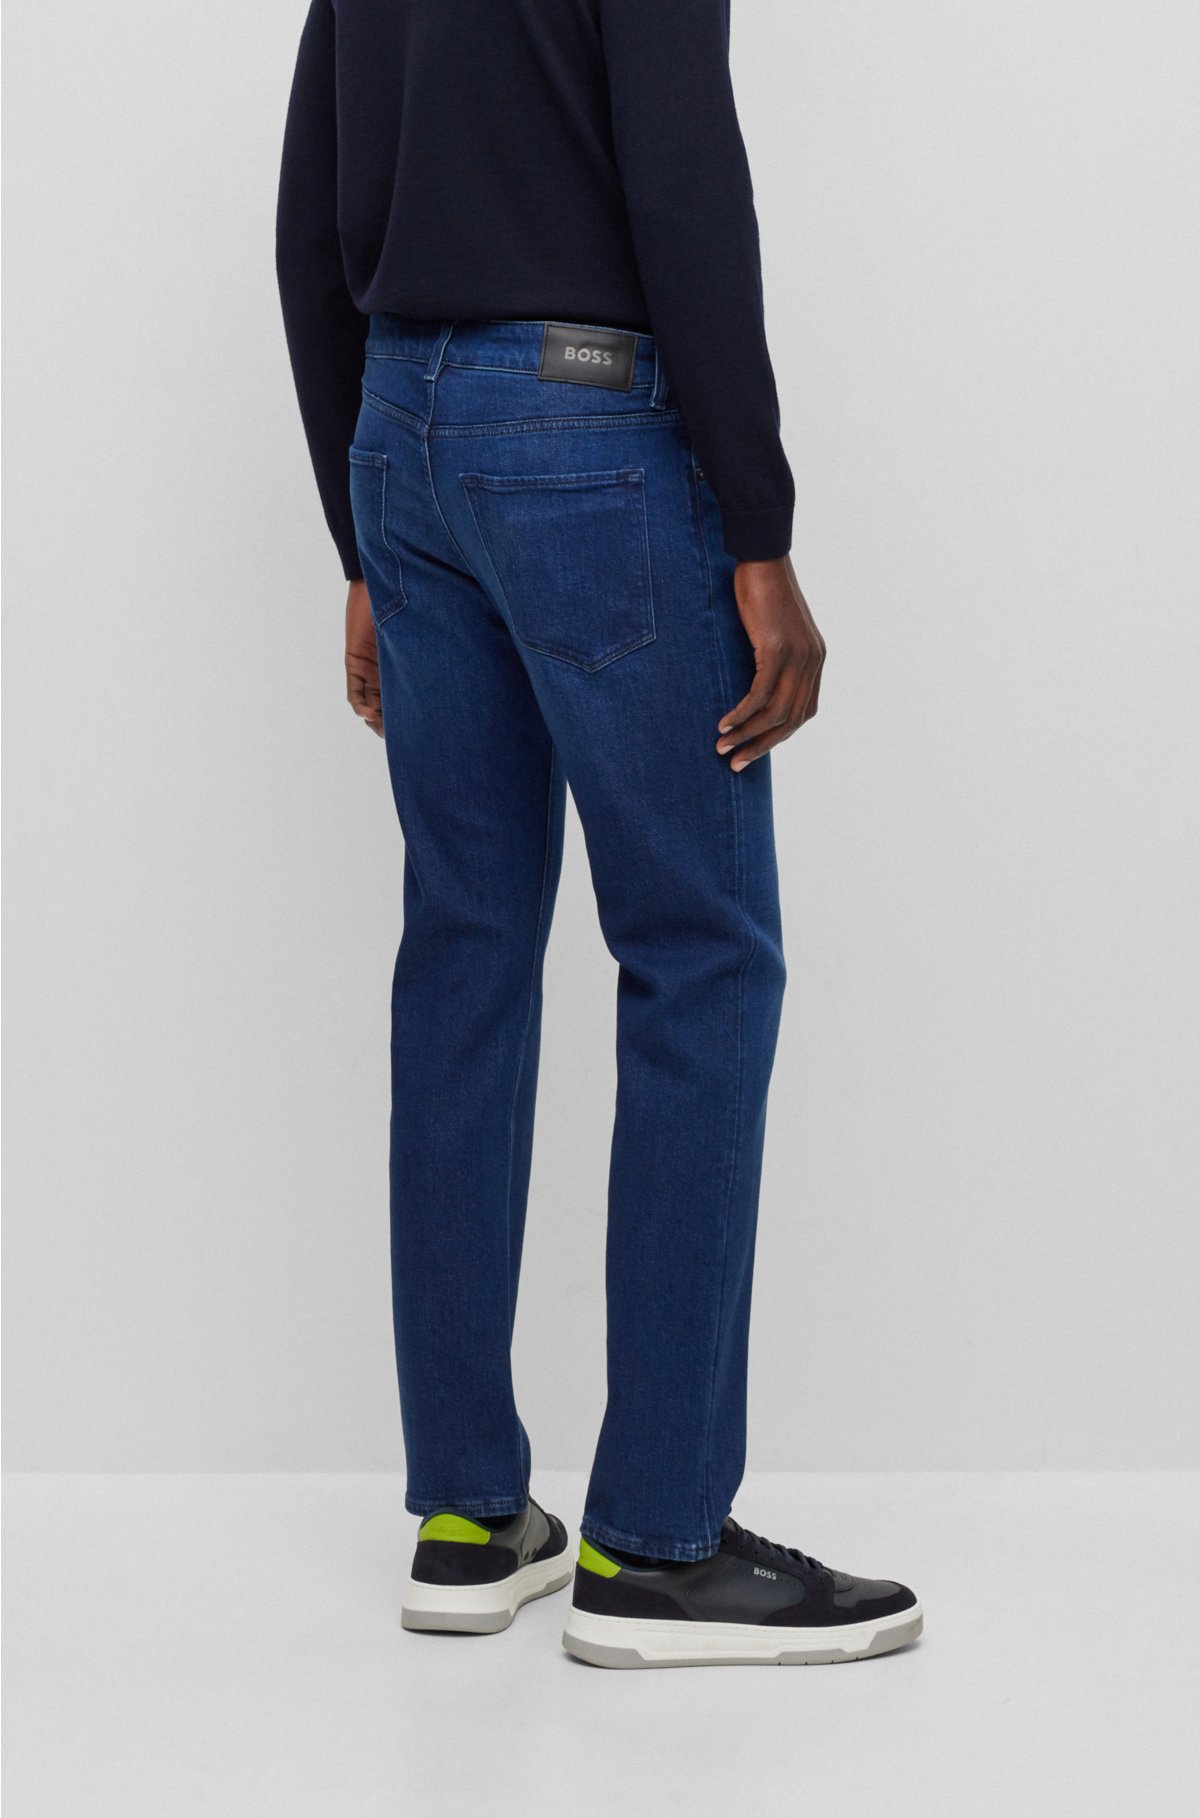 BOSS - Dunkelblaue Jeans Regular-Fit aus Stretch-Denim bequemem